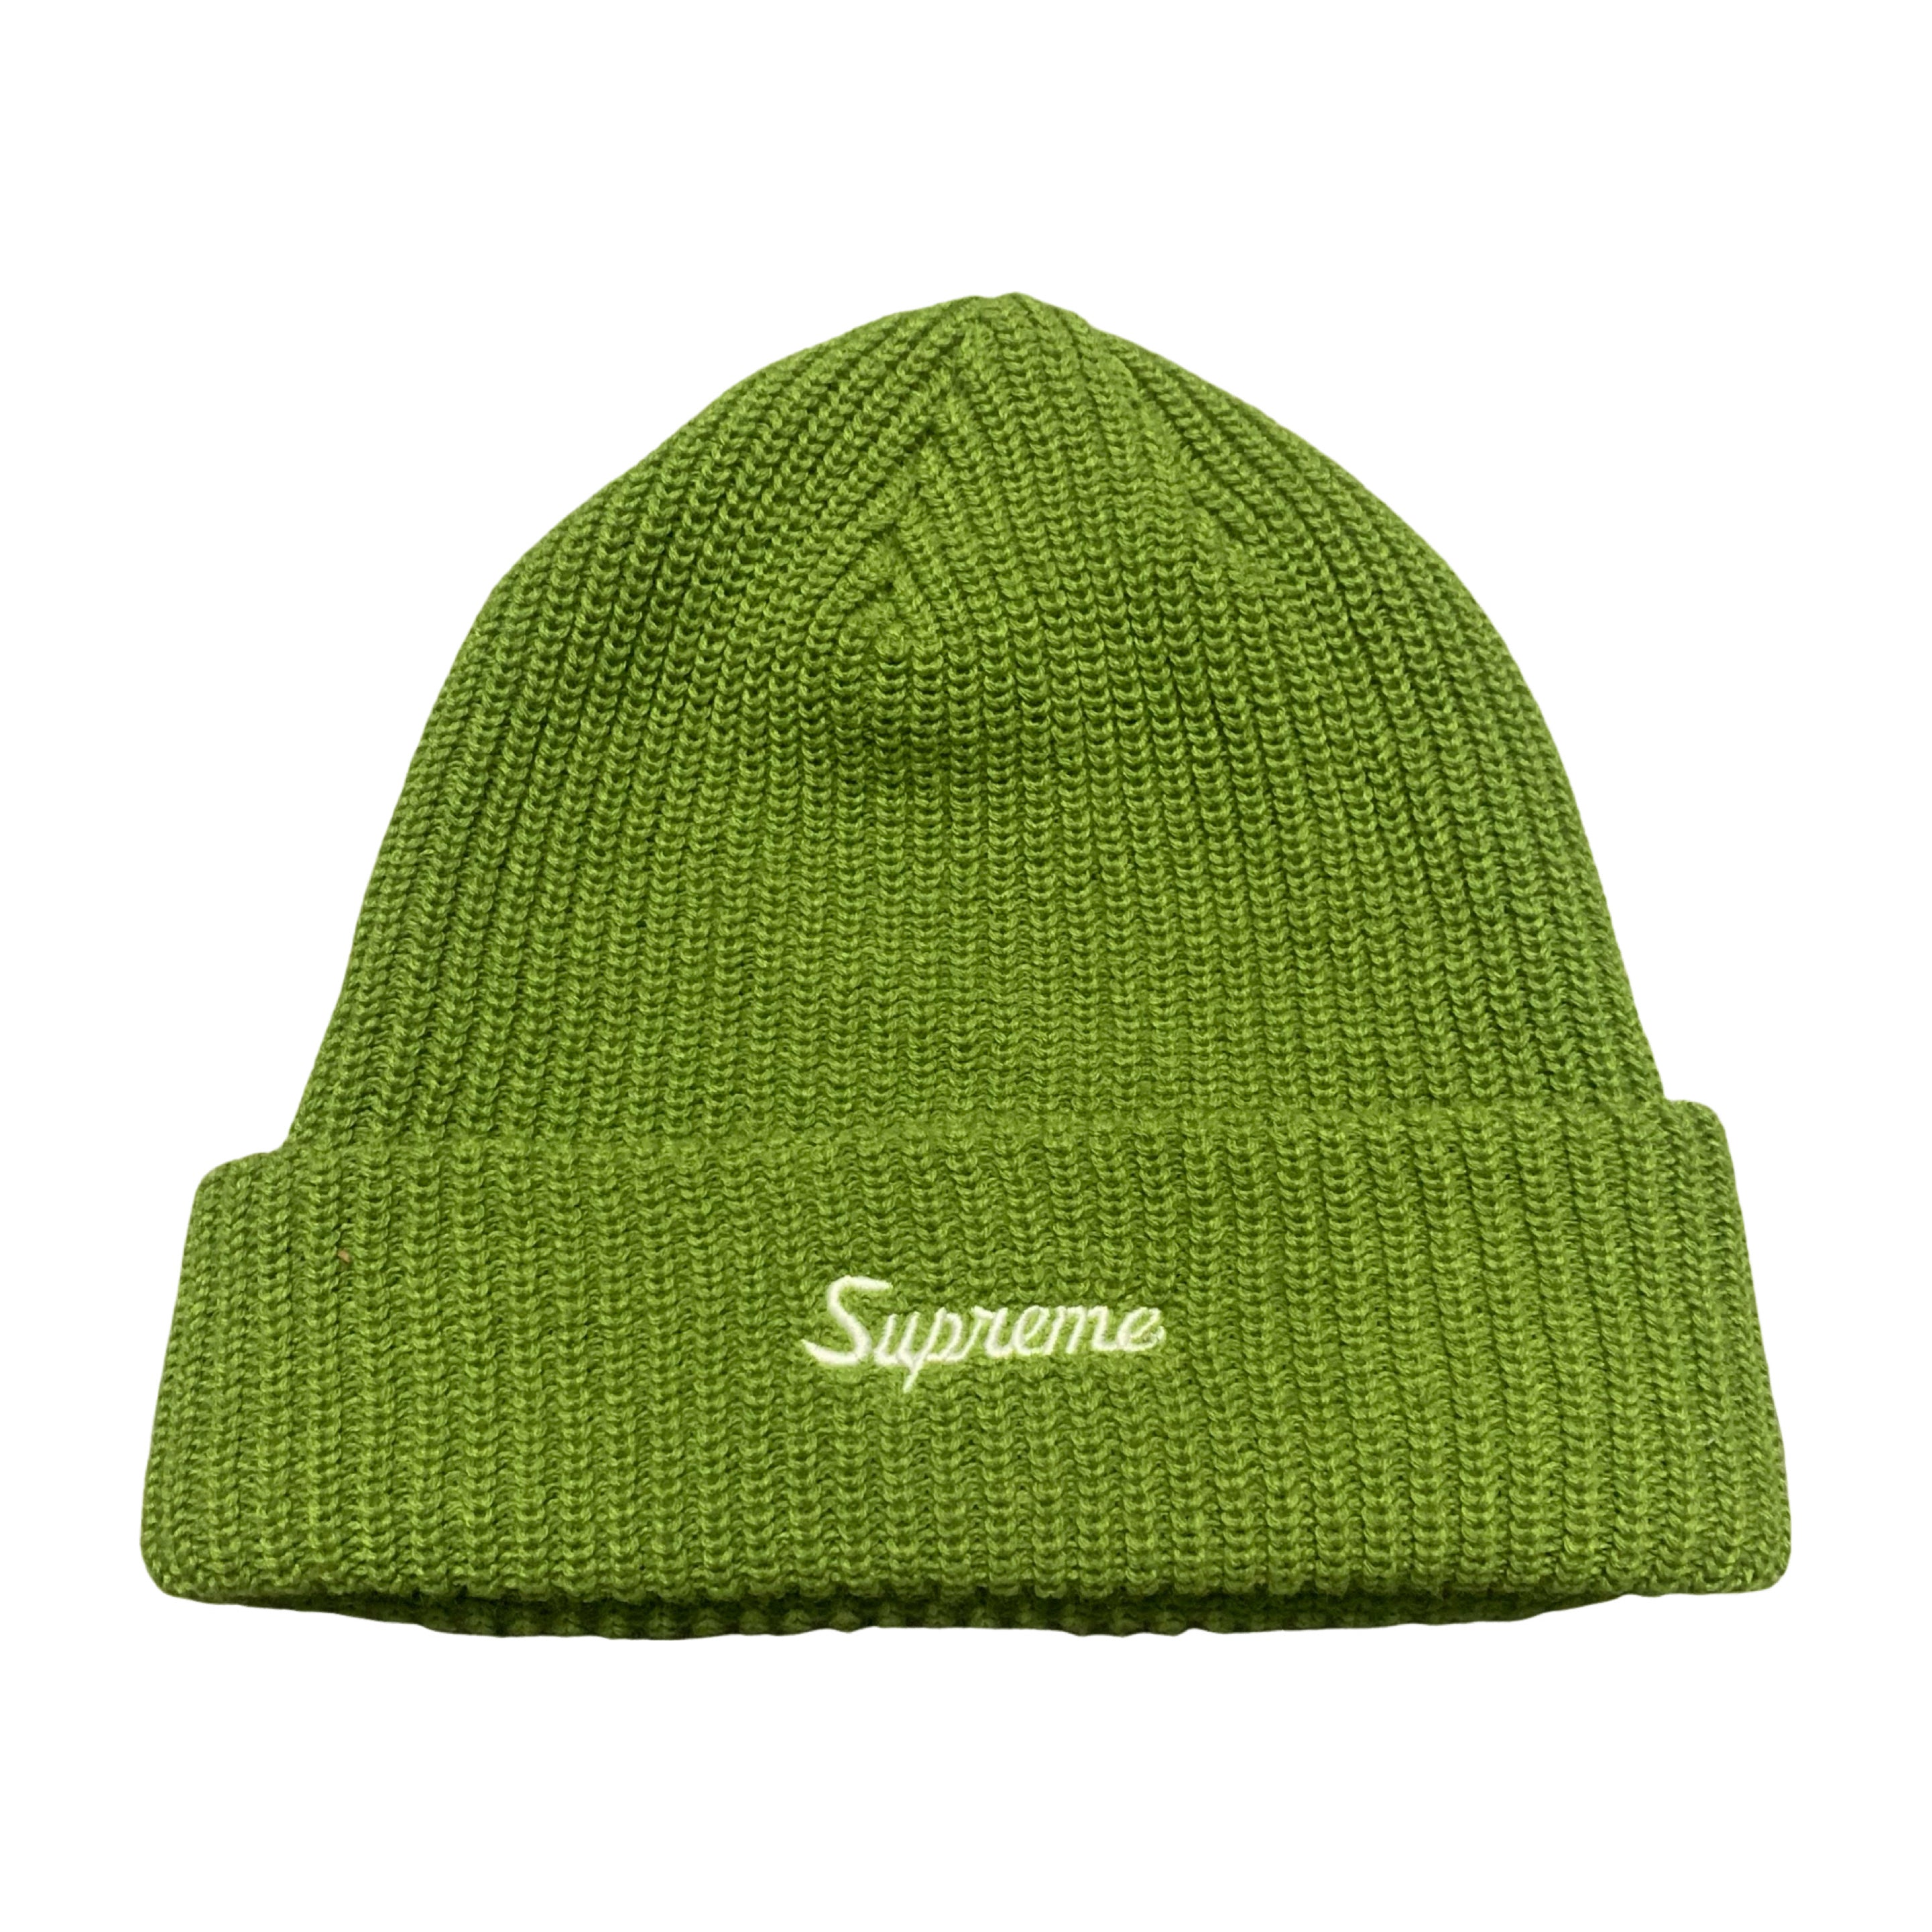 Supreme Beanie Light Green Loose Gauge Beanie Hat